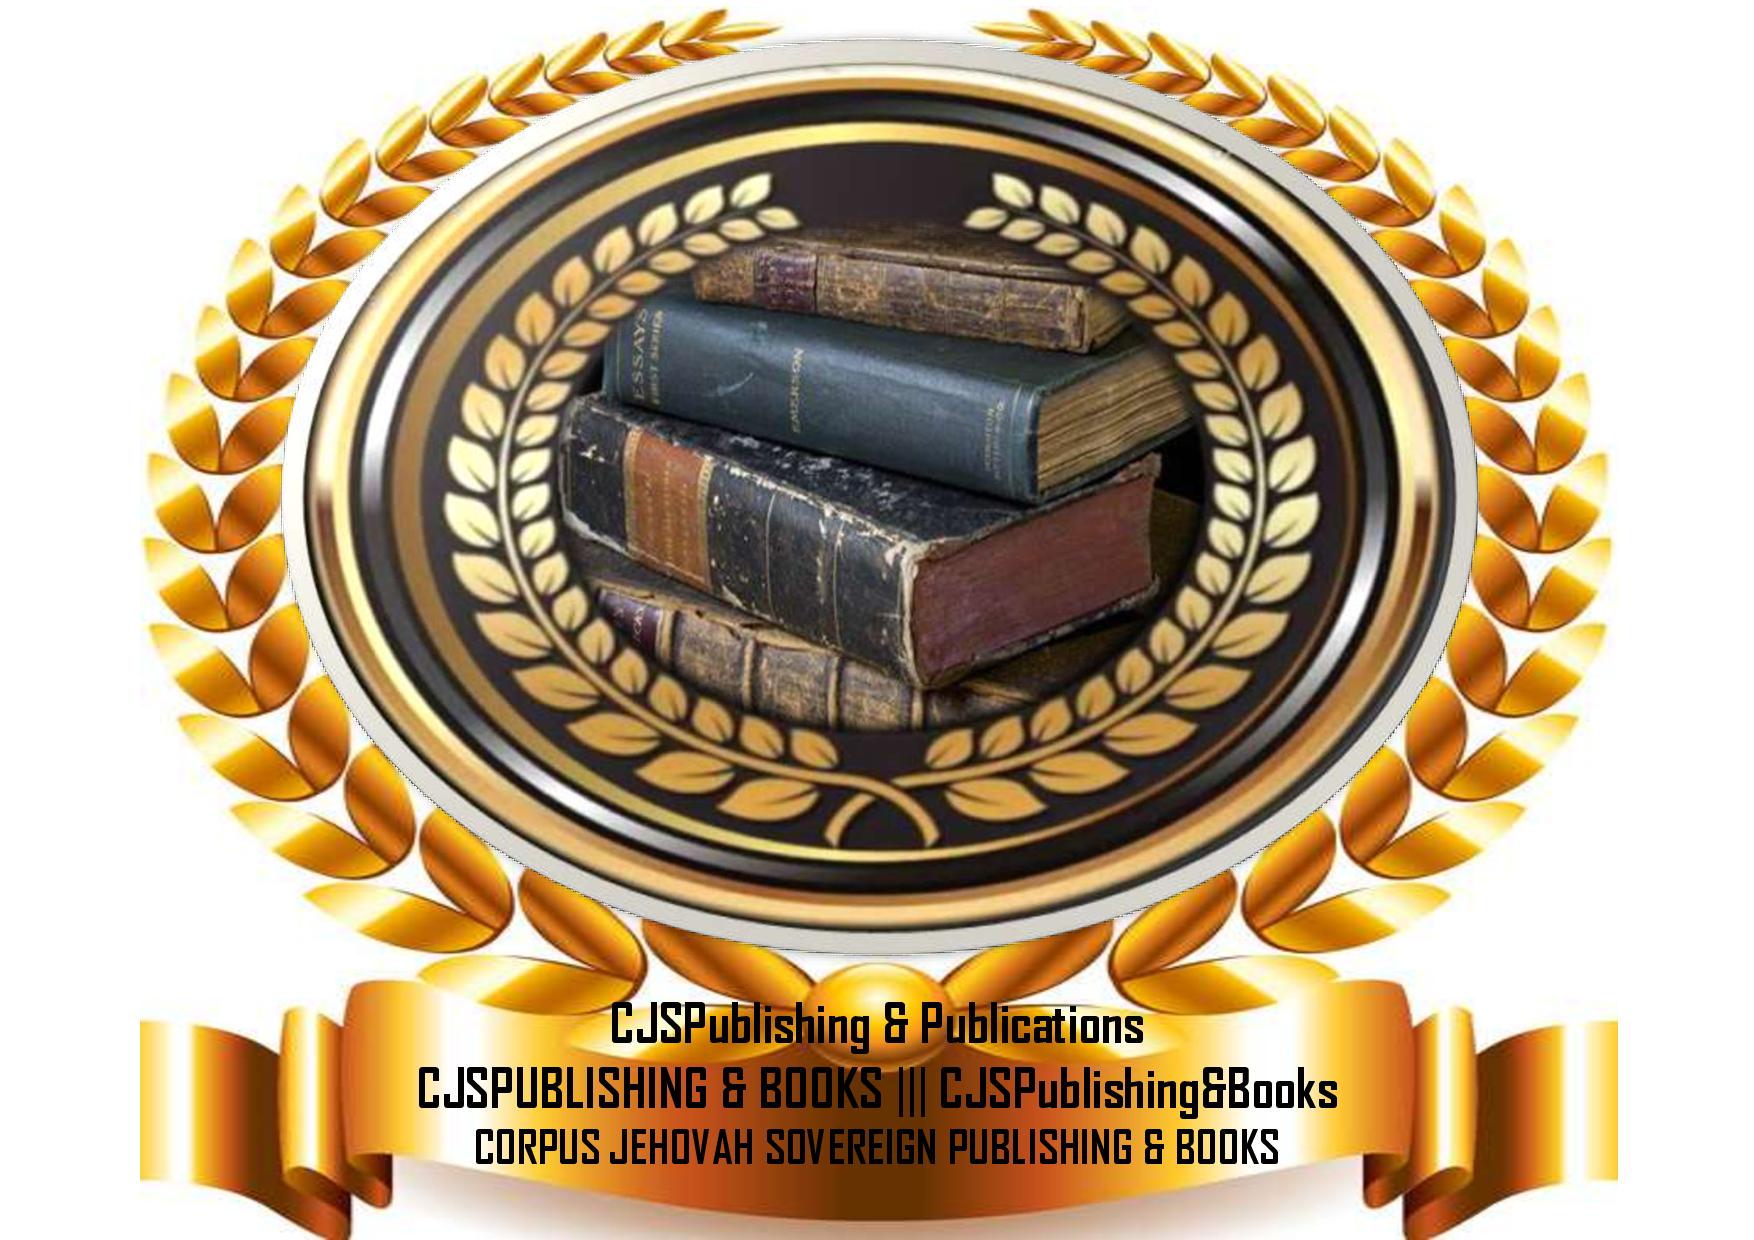 CJSOPUBLiSHiNG ||| CORPUS JEHOVAH SOVEREiGN OMNiSCiENCE PUBLiSHiNG & BOOKS